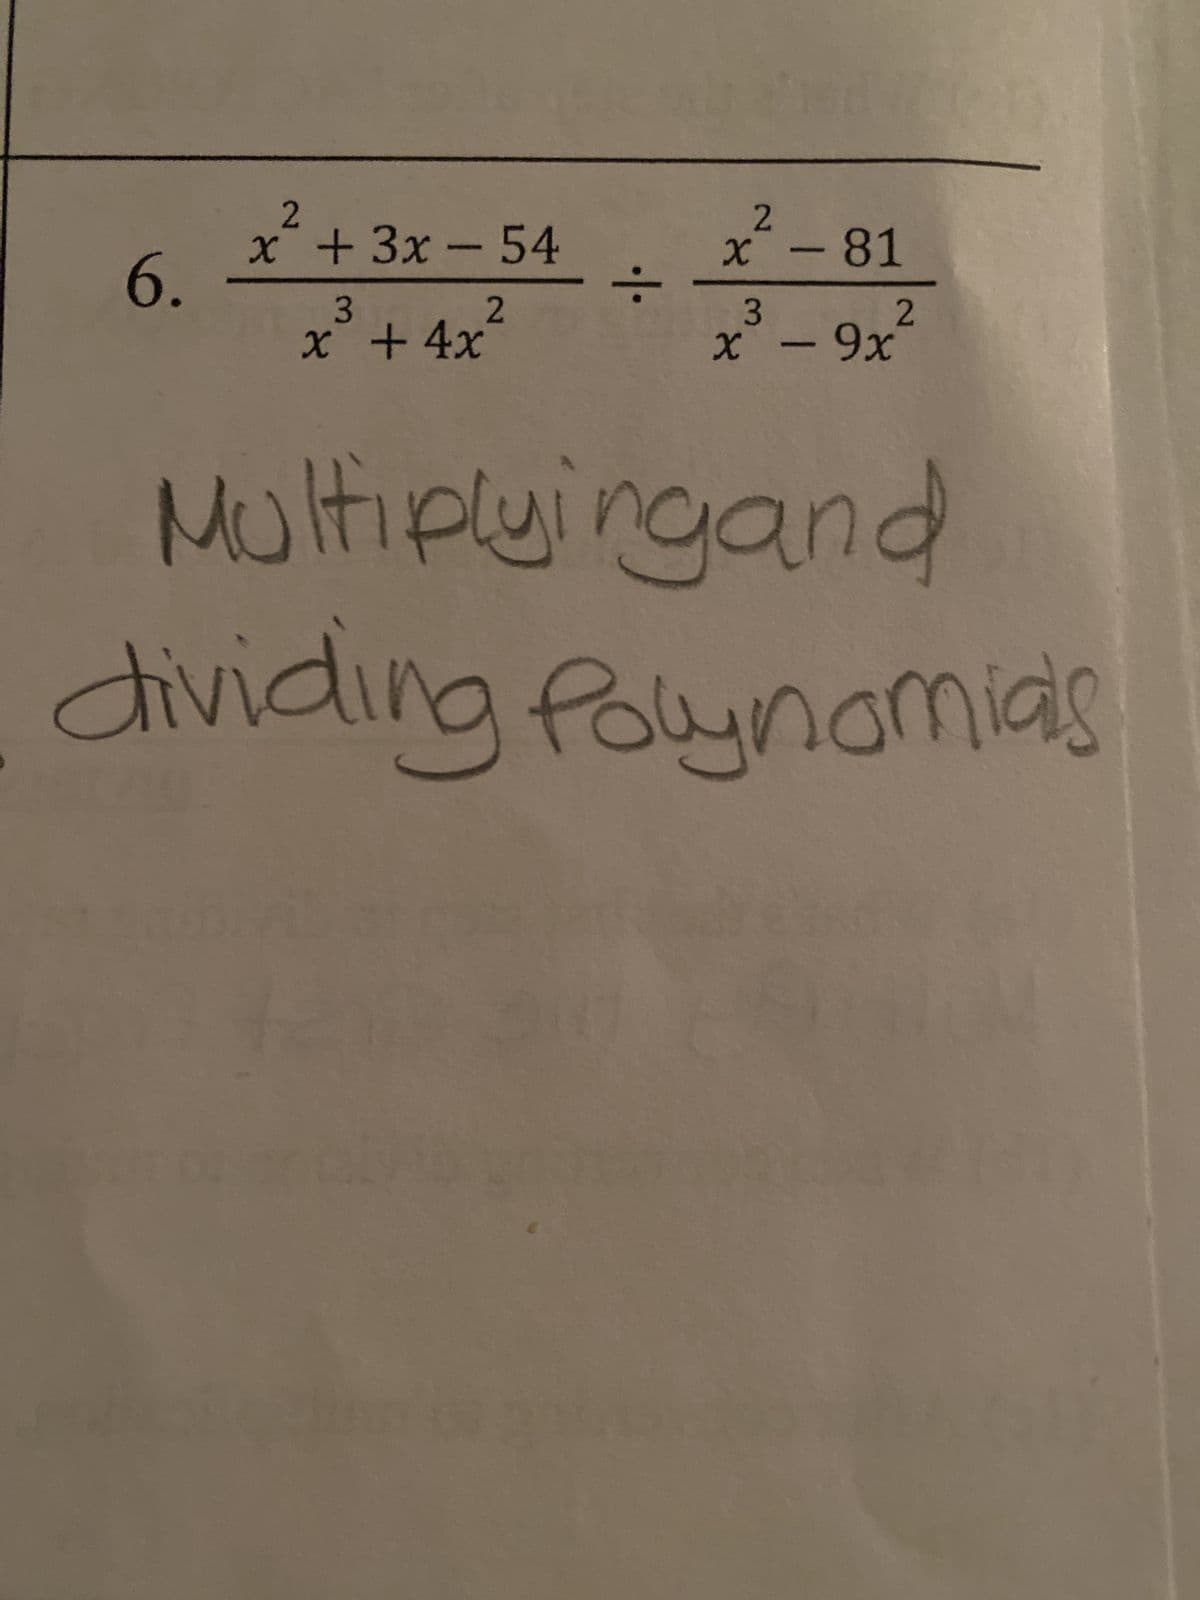 6.
2
x + 3x - 54
x
3
+ 4x
2
÷
x² - 81
3
x - 9x
2
Multiplyingand
dividing Polynomials